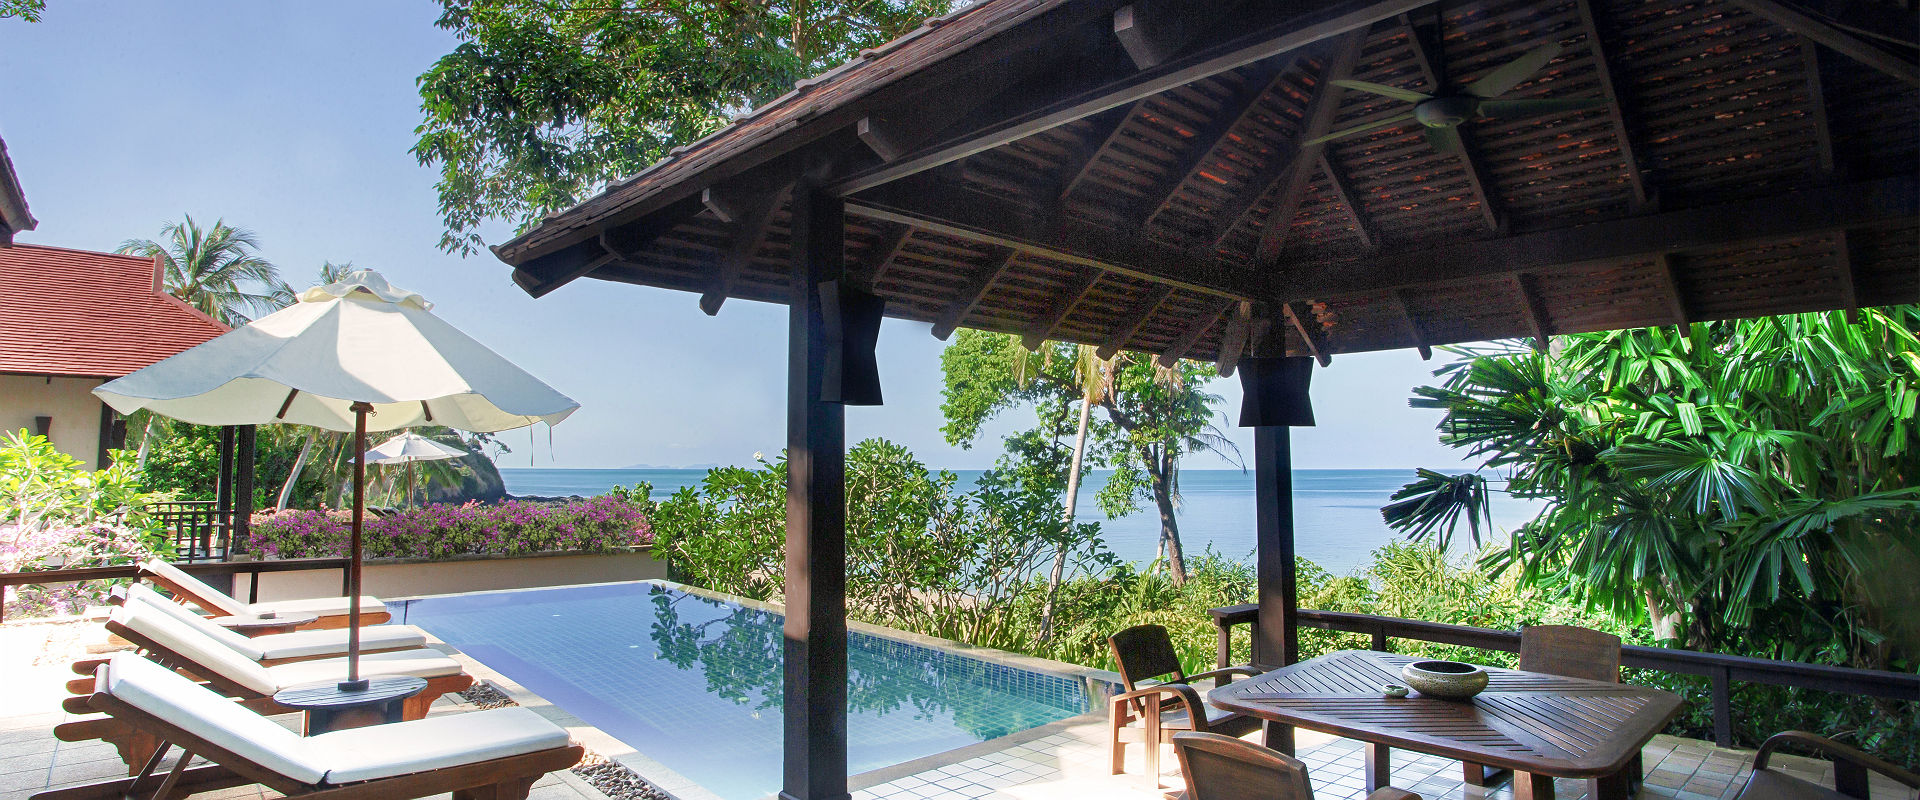 Pimalai Resort and Spa -beachside villa three bedroom - piscine